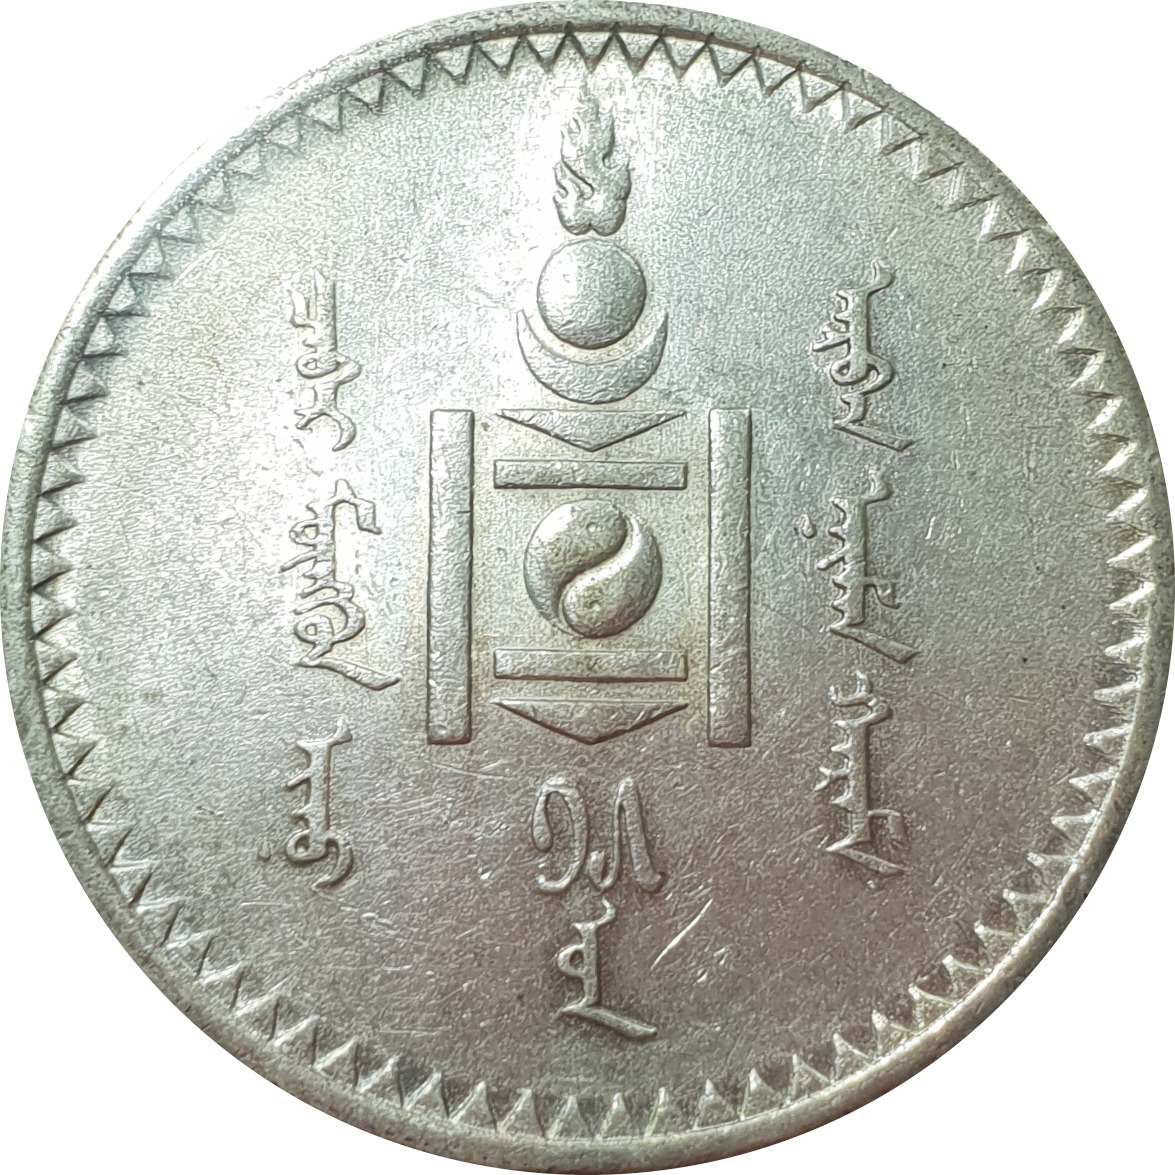 Mongolia 1925 1 Tugrik Silver Unc Coin China Rare